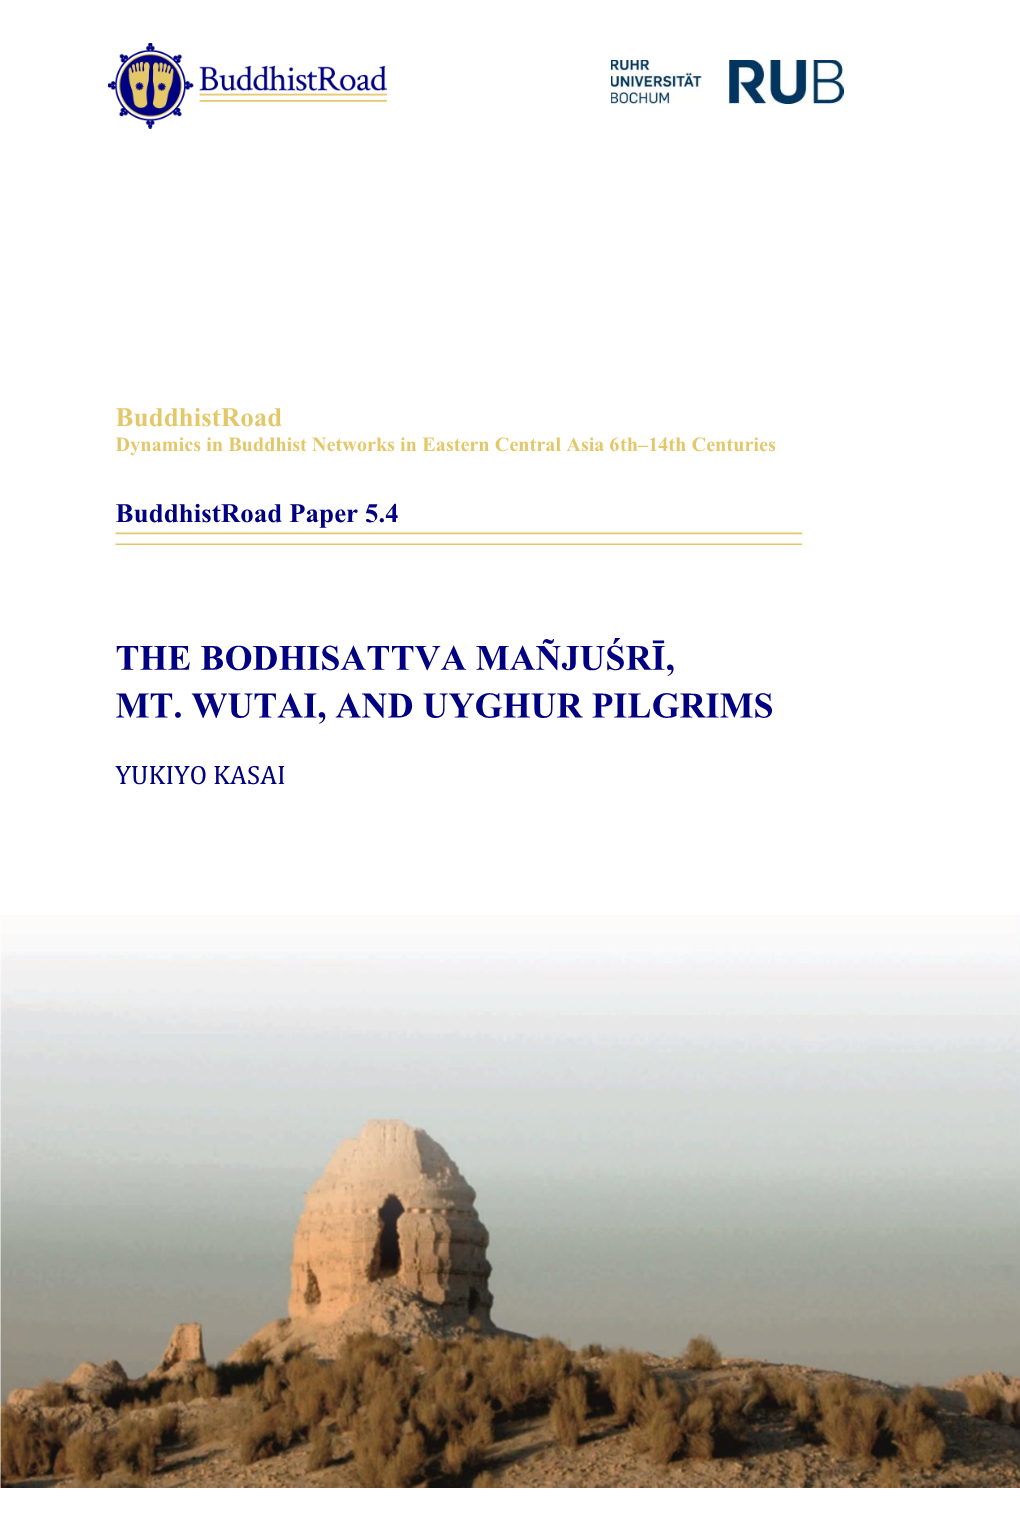 The Bodhisattva Mañjuśrī, Mt. Wutai, and Uyghur Pilgrims